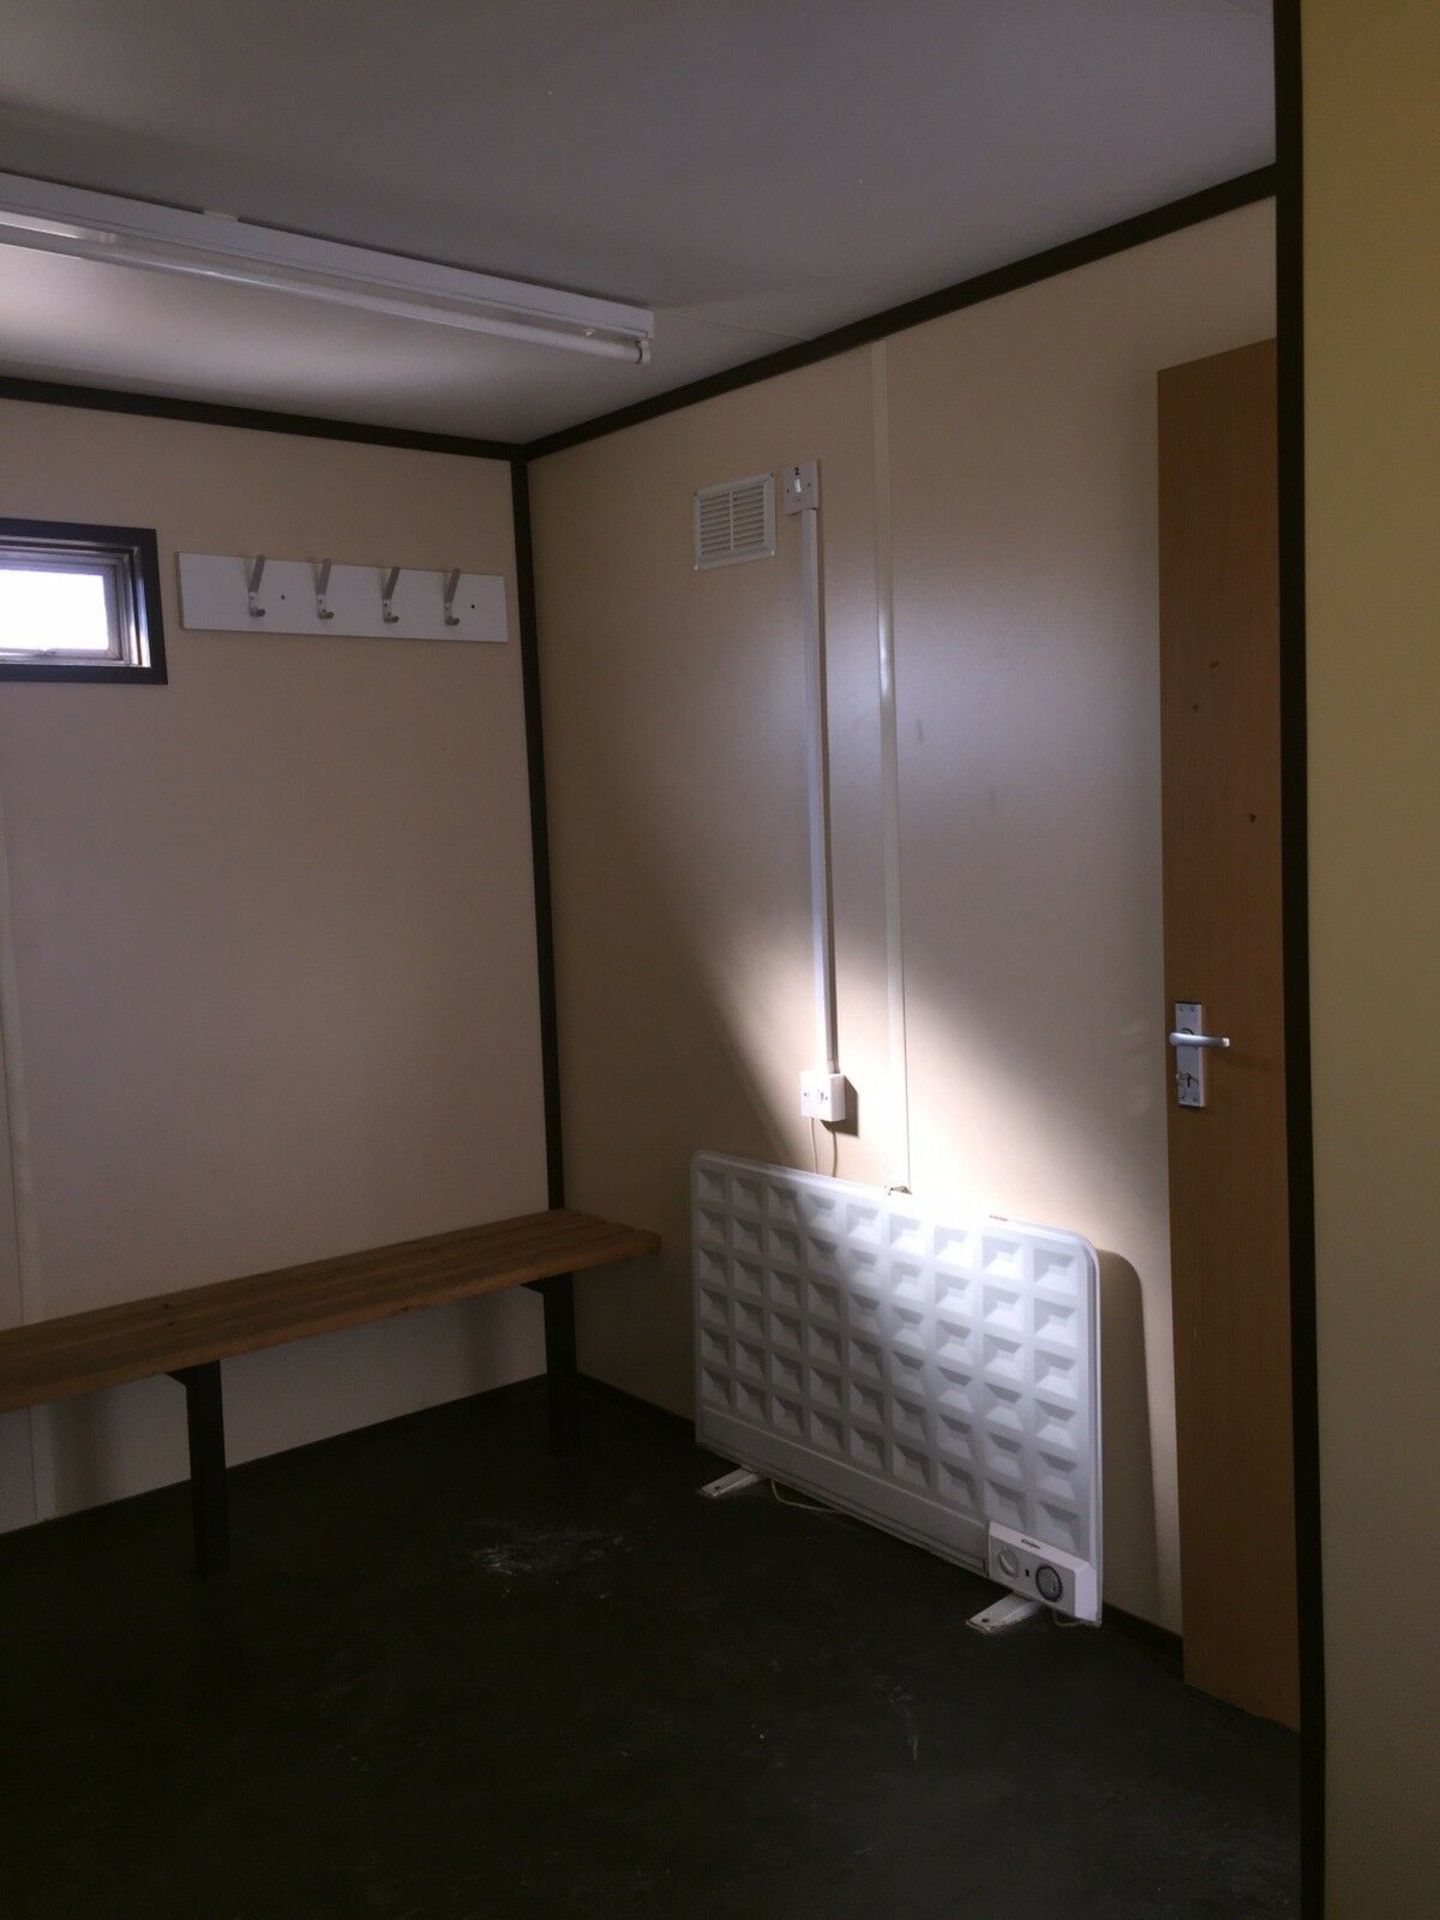 Site Shower Block Drying Room Welfare Unit Portabl - Image 11 of 12